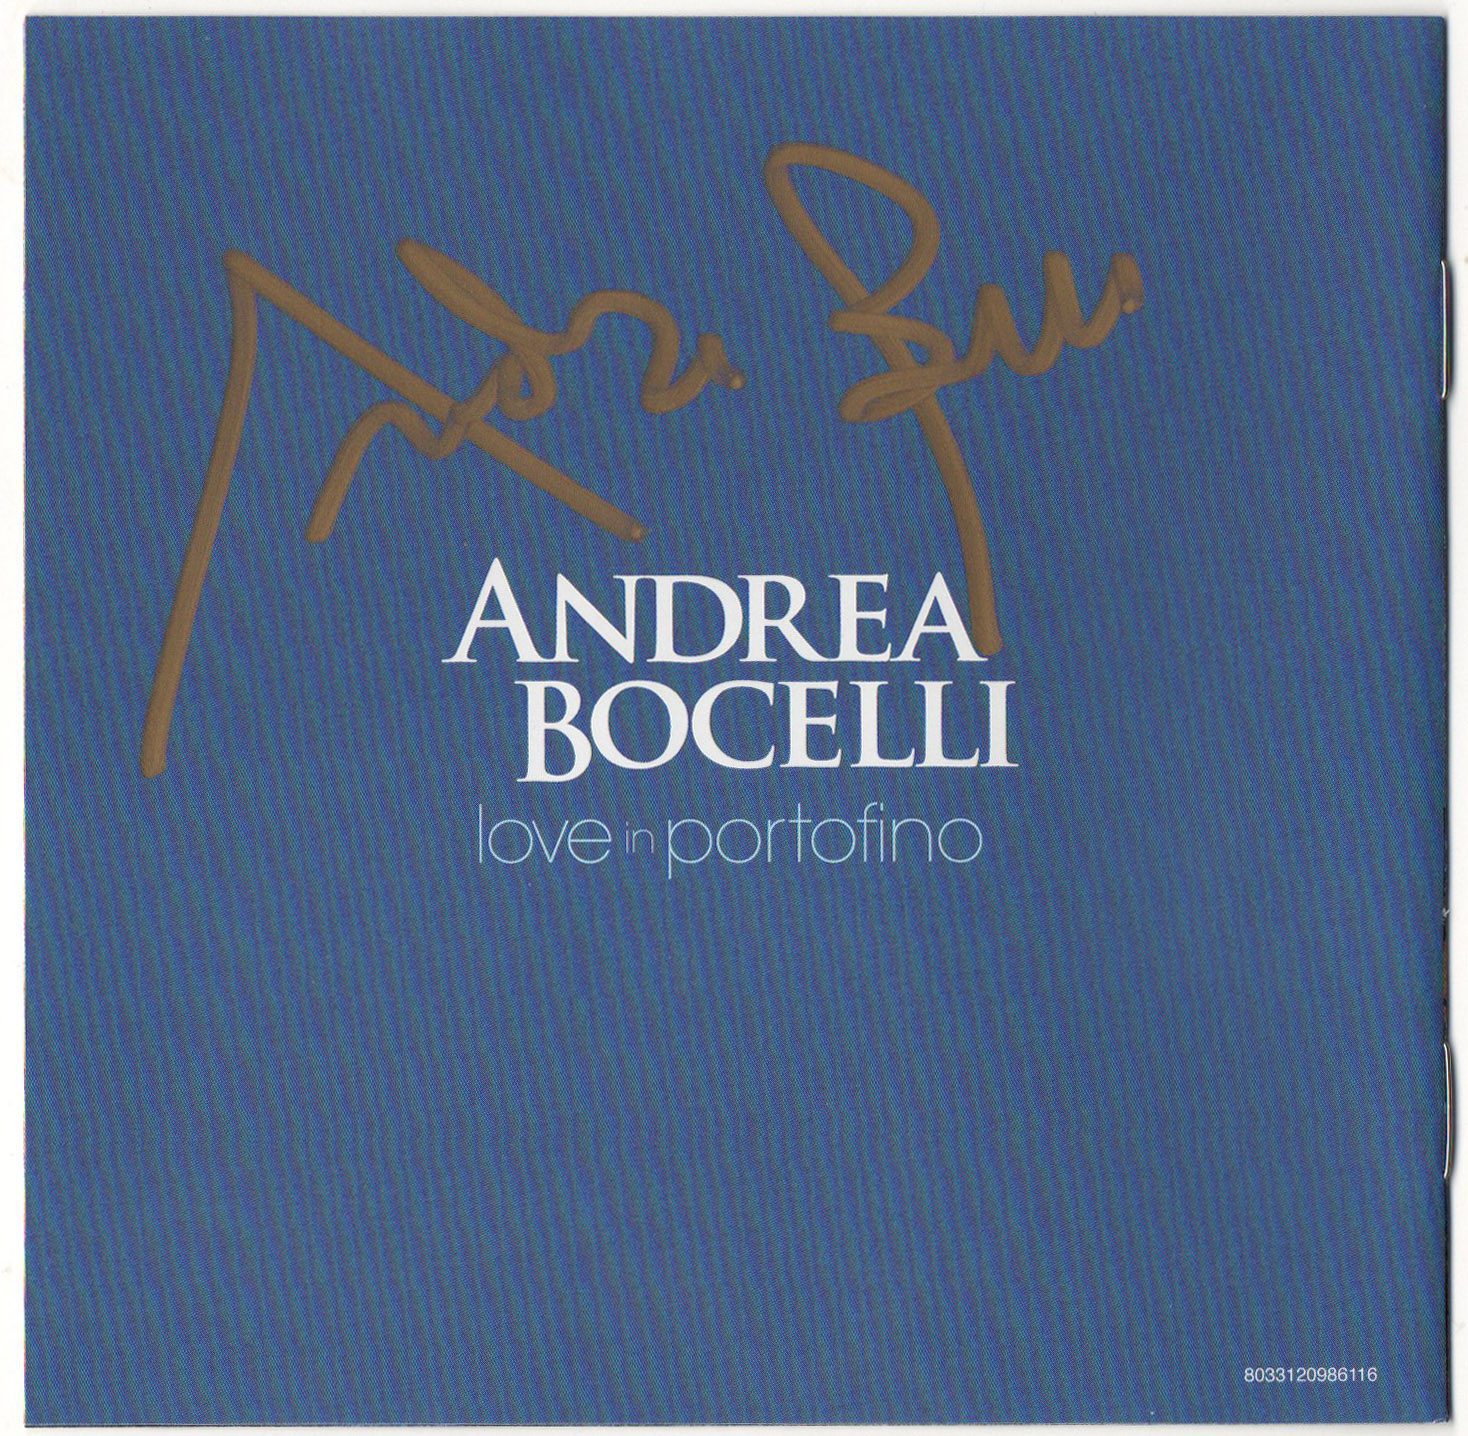 ANDREA BOCELLI Biography 2022: Near-abortion To Matteo Bocelli